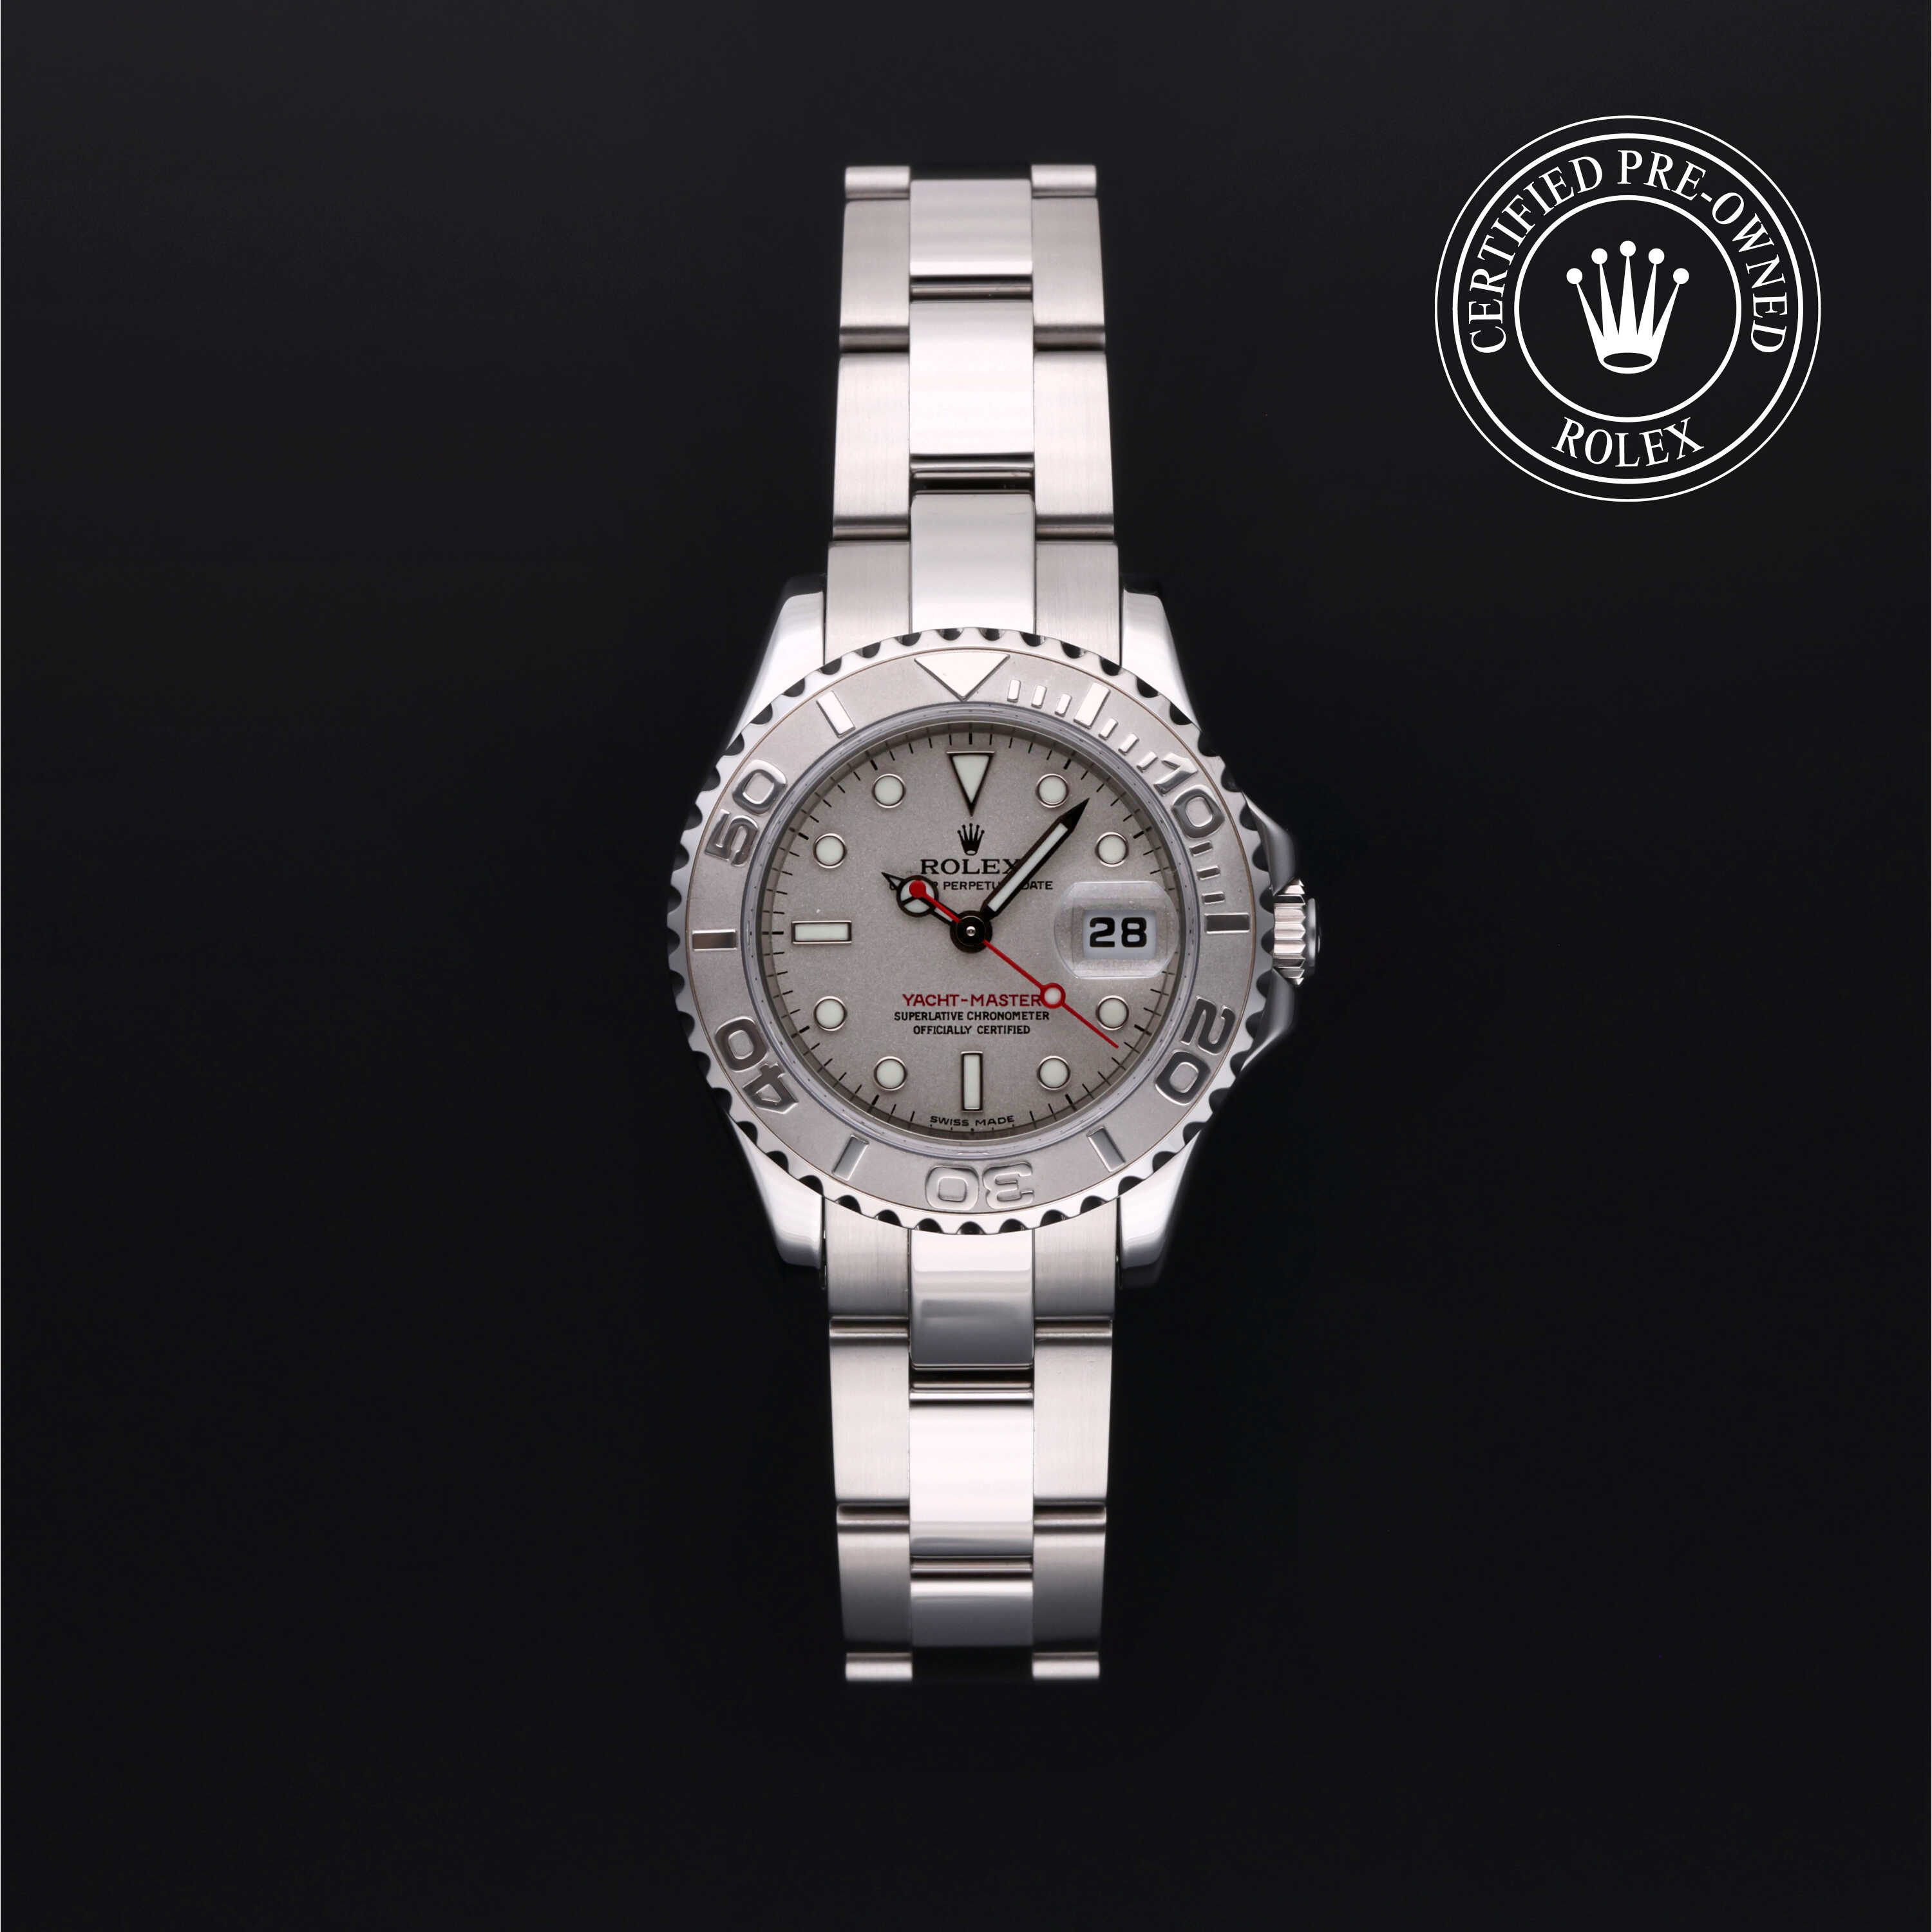 Rolex Yacht-Master Platinum and Stainless Steel Wristwatch (2005